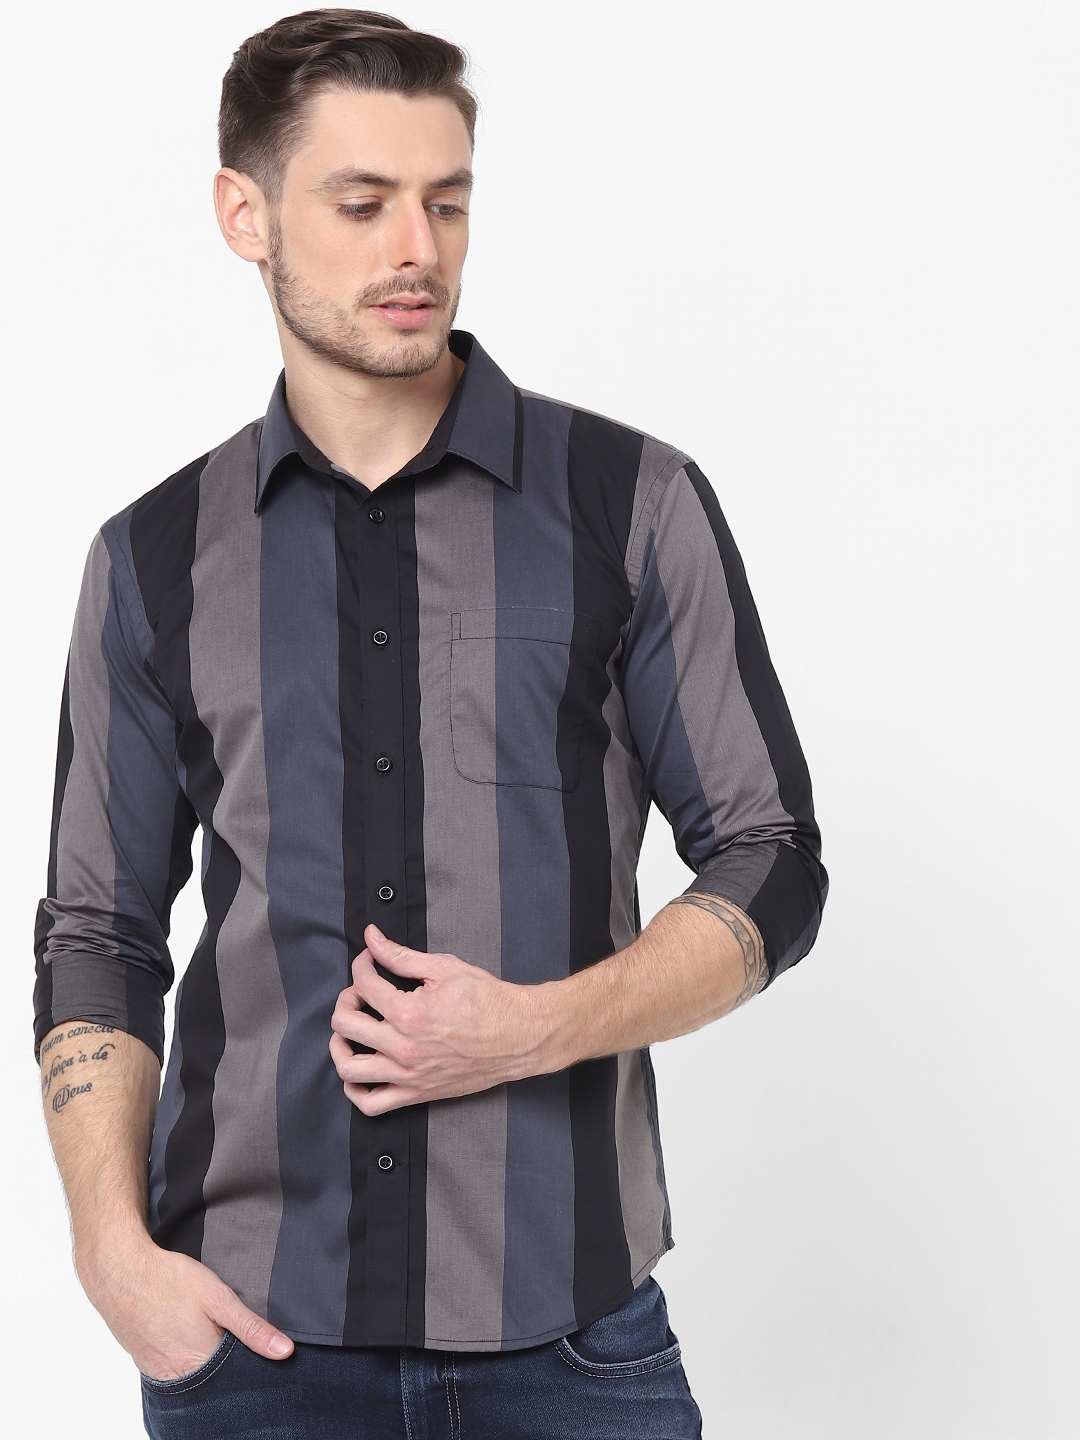 celio | Black and Grey Striped Shirt 